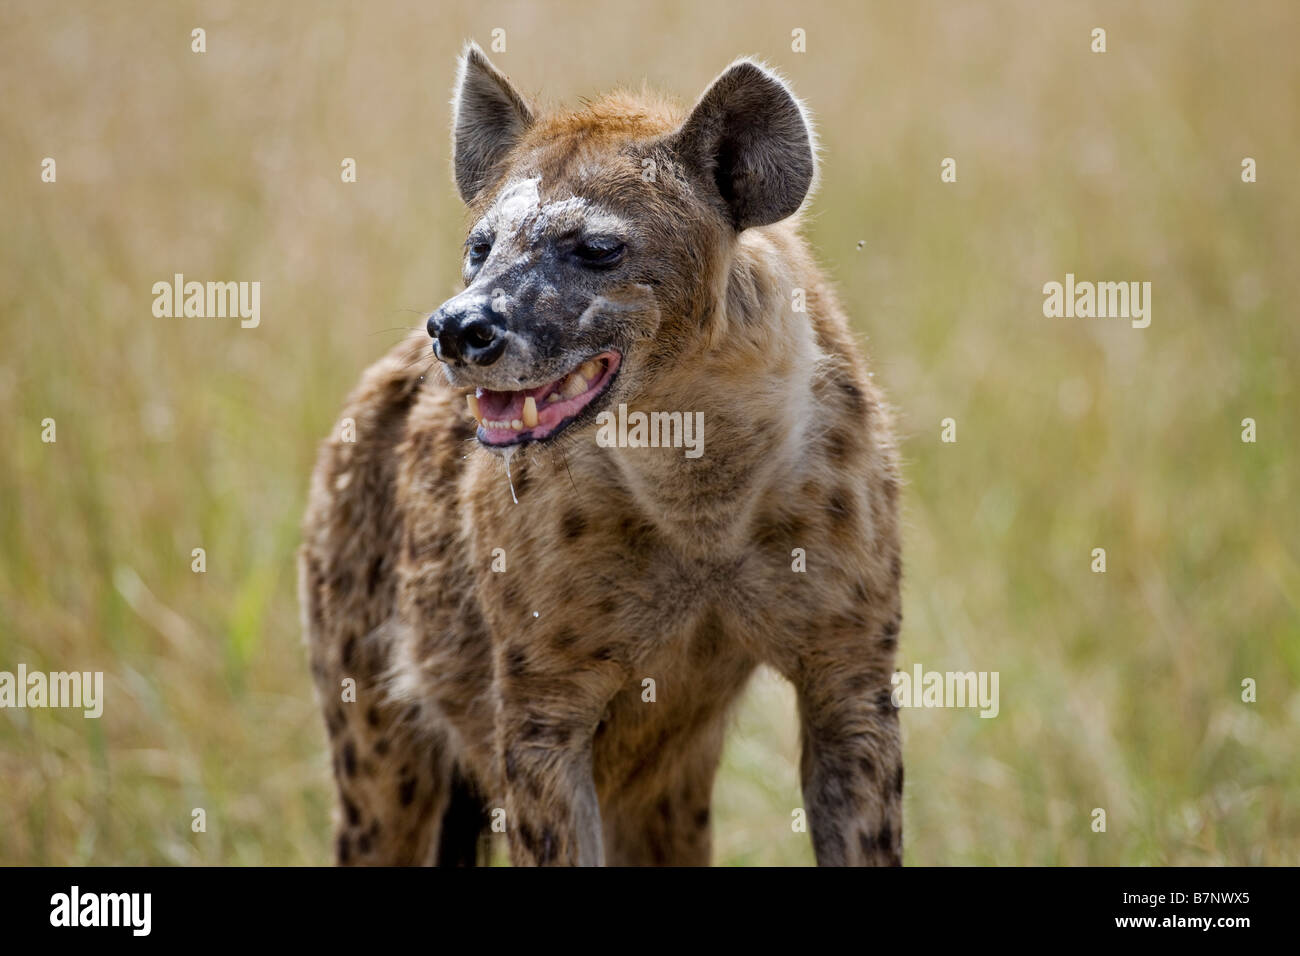 Africa, Kenya, Masai Mara, Narok district. A spotted hyena in the Masai Mara National Reserve of Southern Kenya. Stock Photo